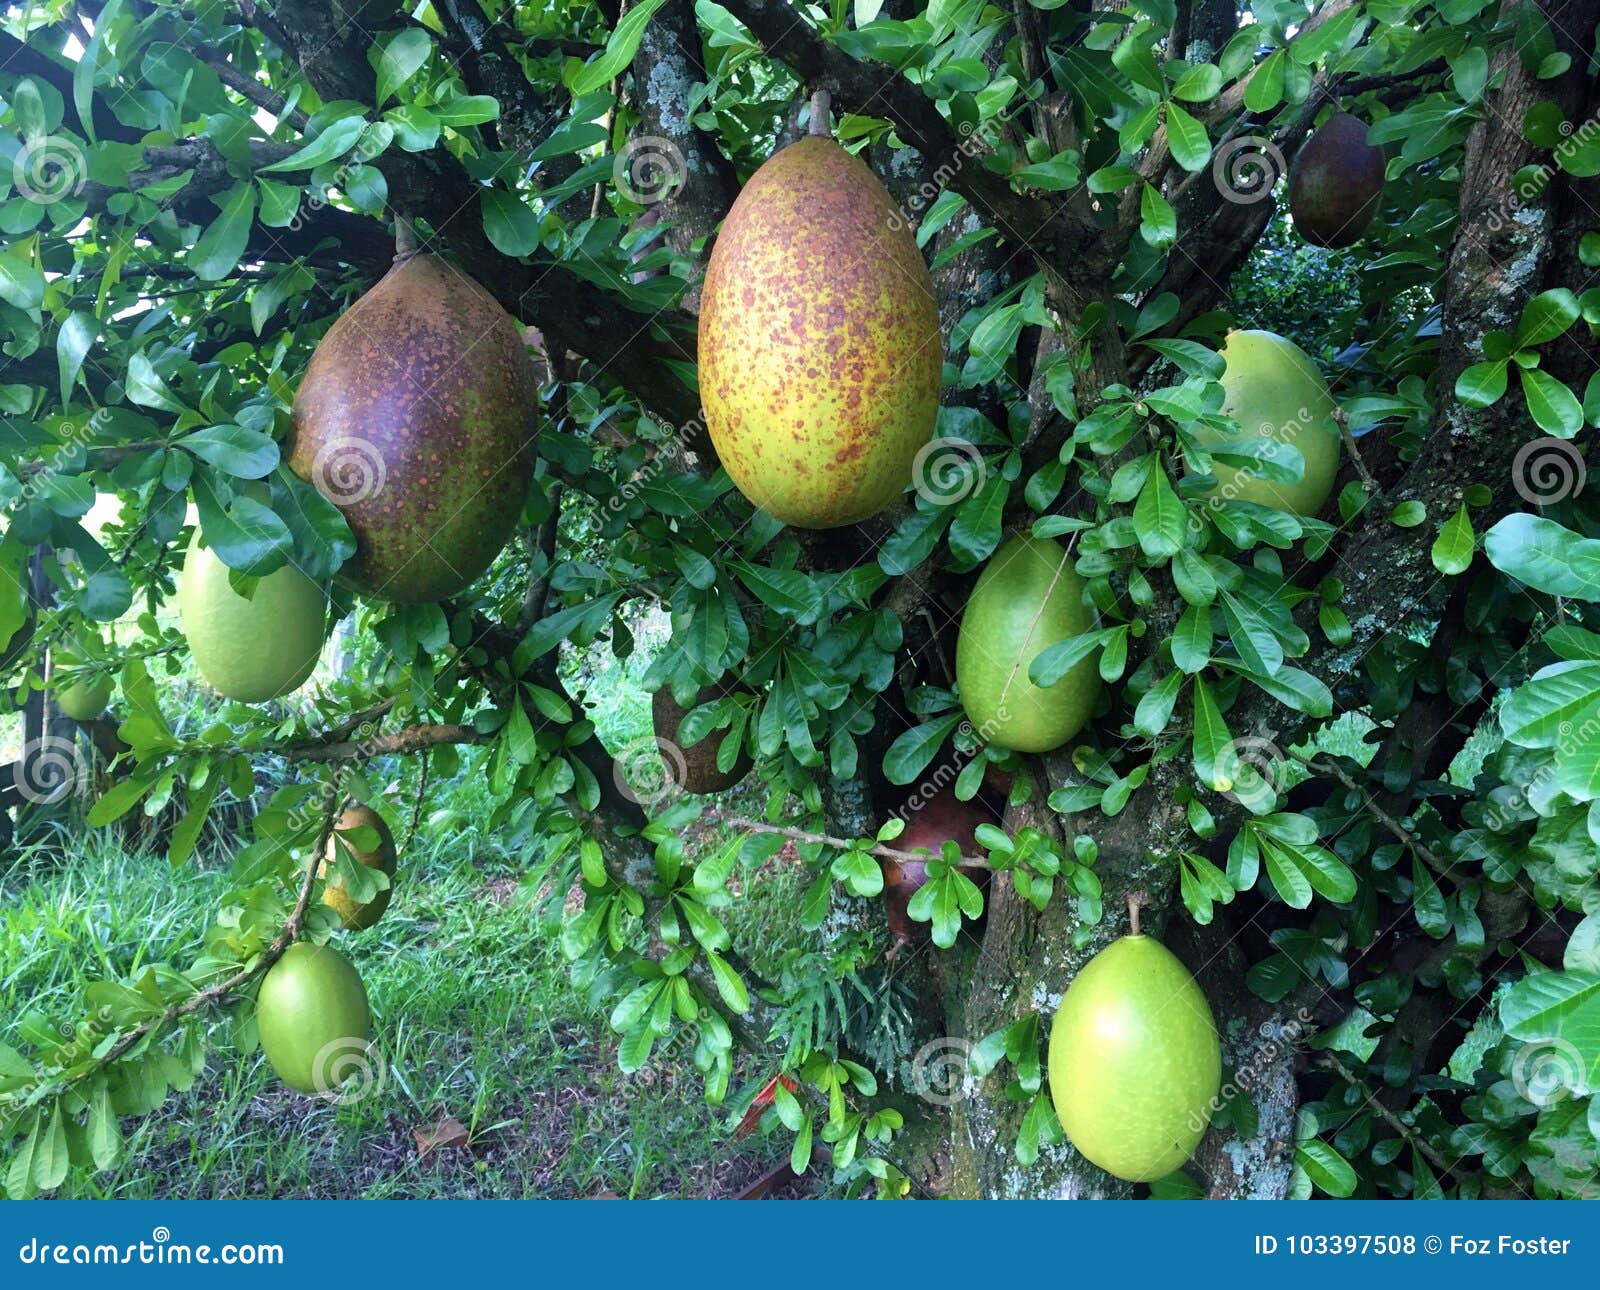 unusual gourds fazenda in sao paulo state brazil